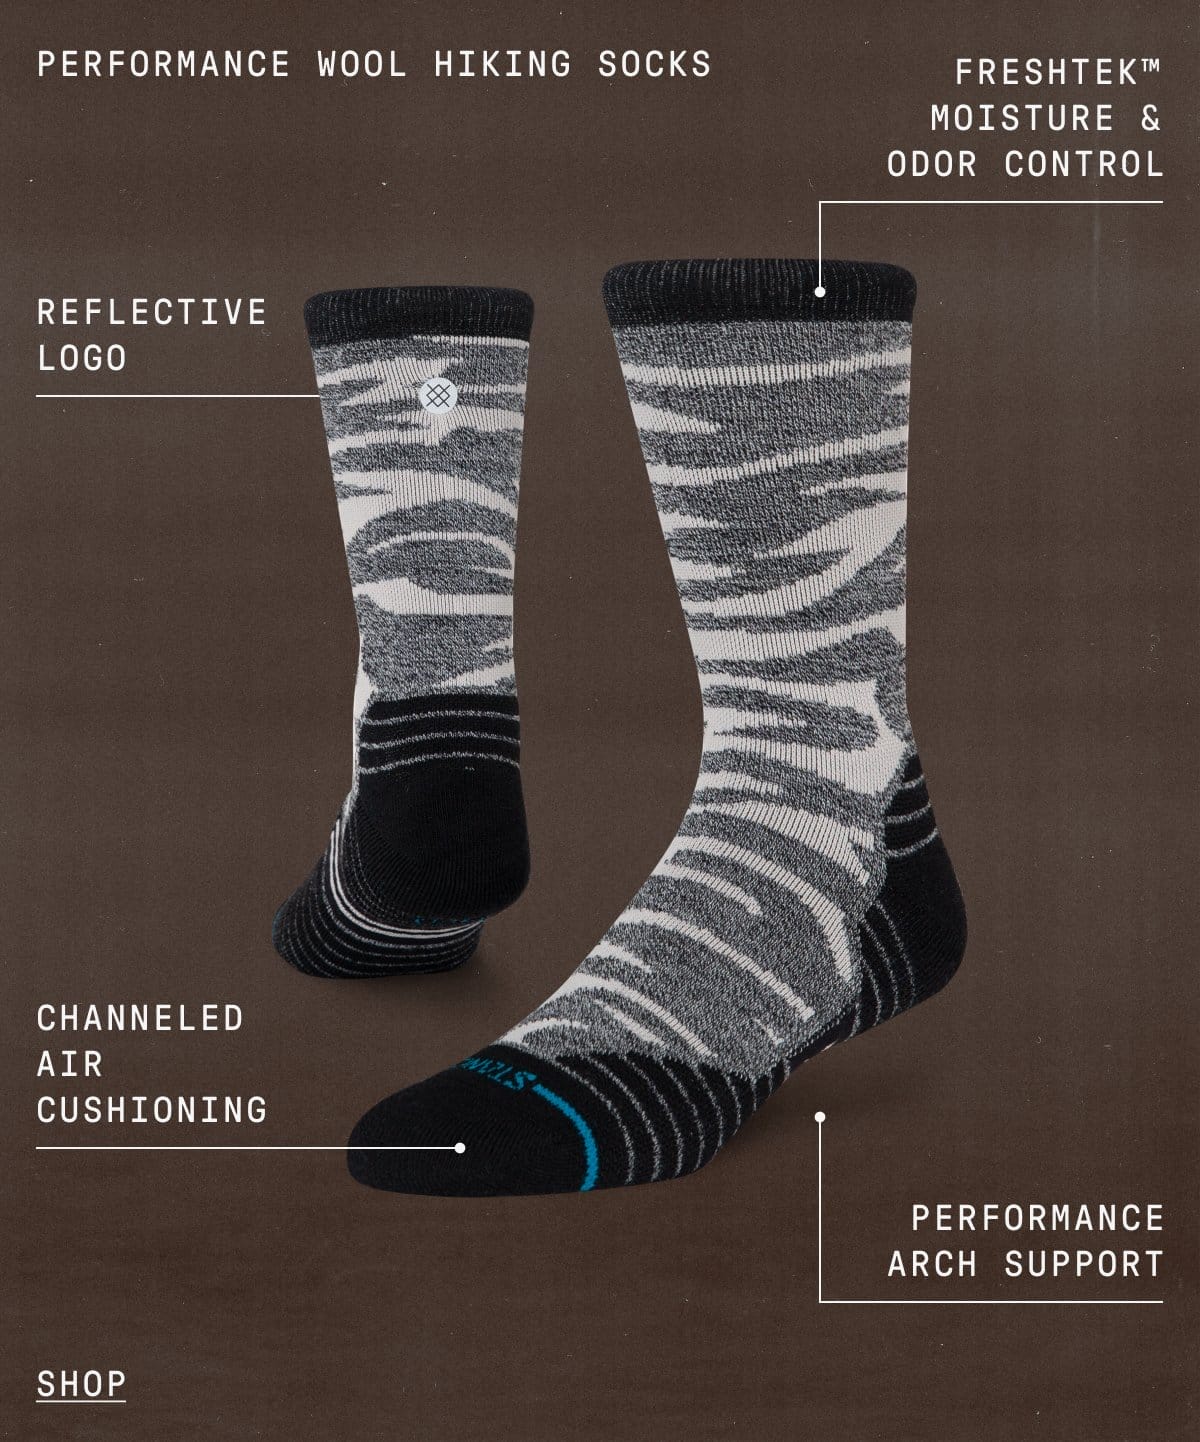 Performance hike socks